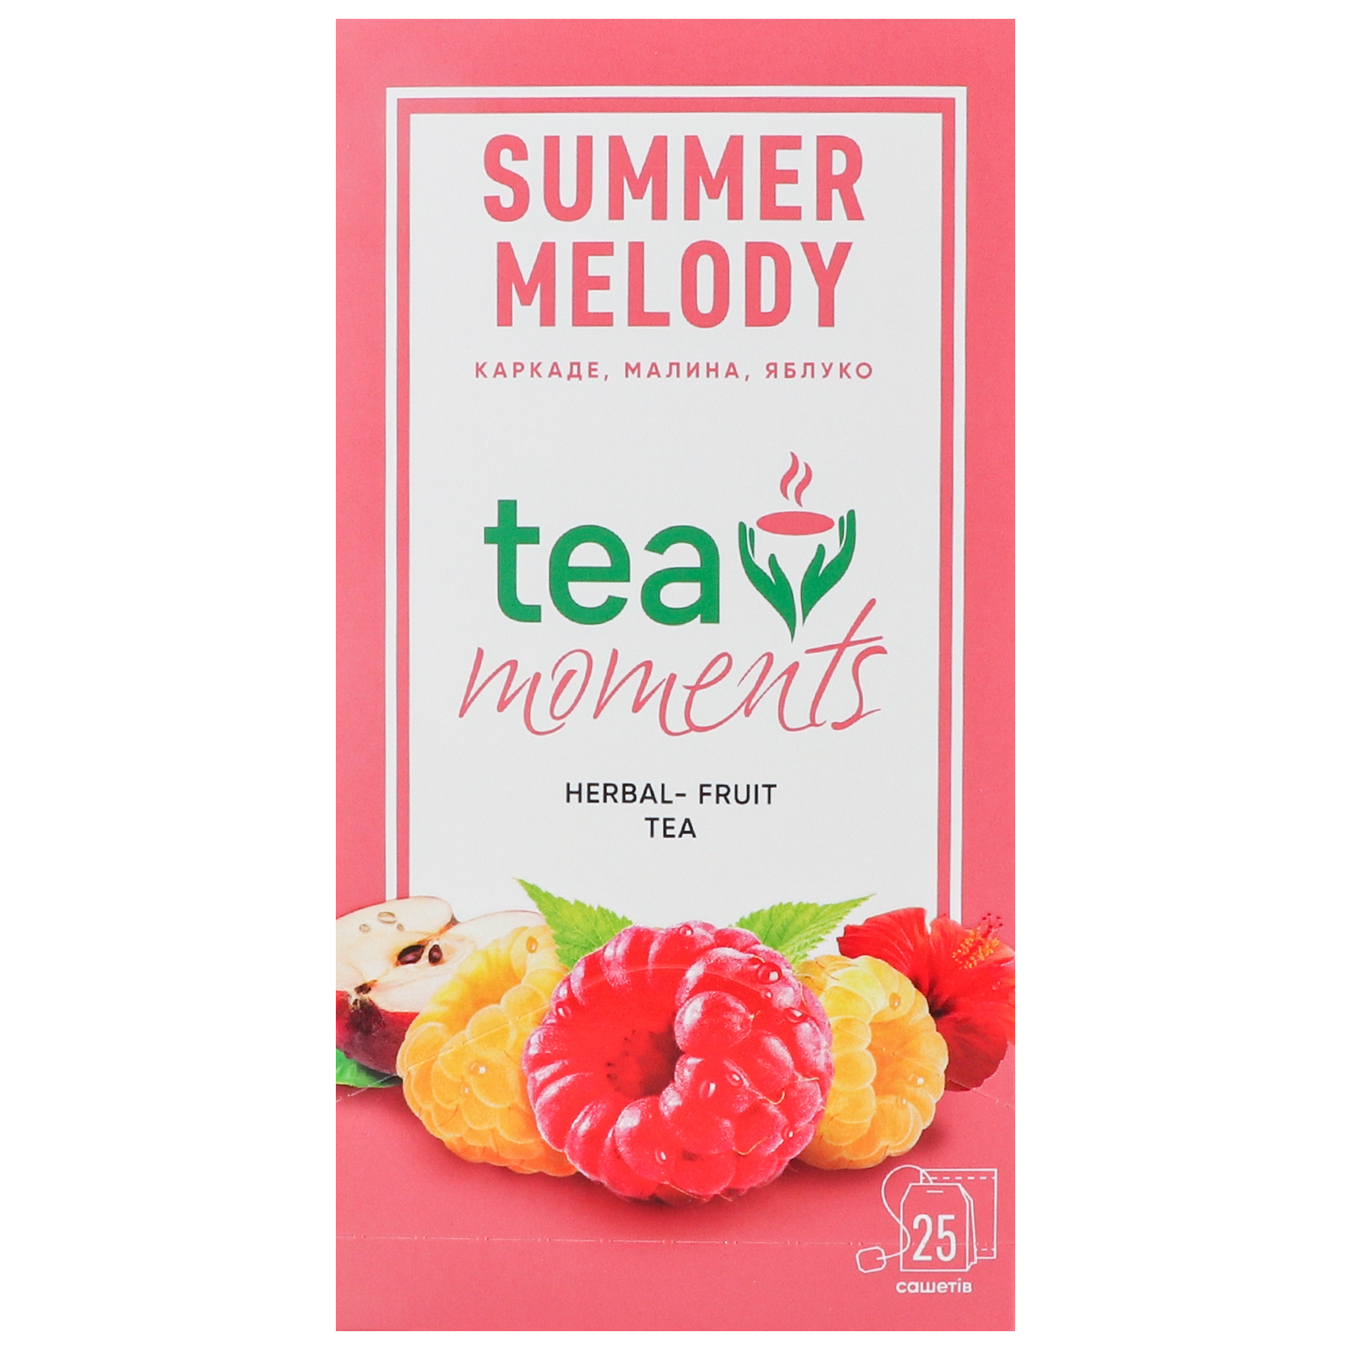 Tea Moments Summer Melody tea from Sudan rose (karkade) sachet 25*1.6g